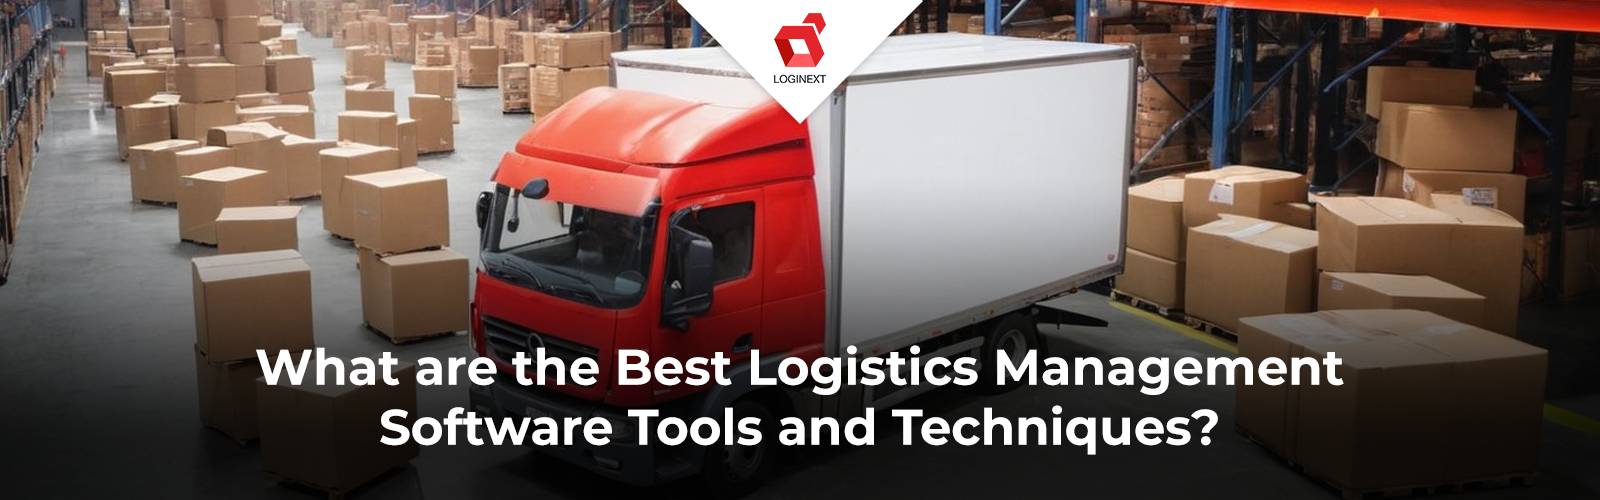 Best Logistics Management Software Tools and Techniques